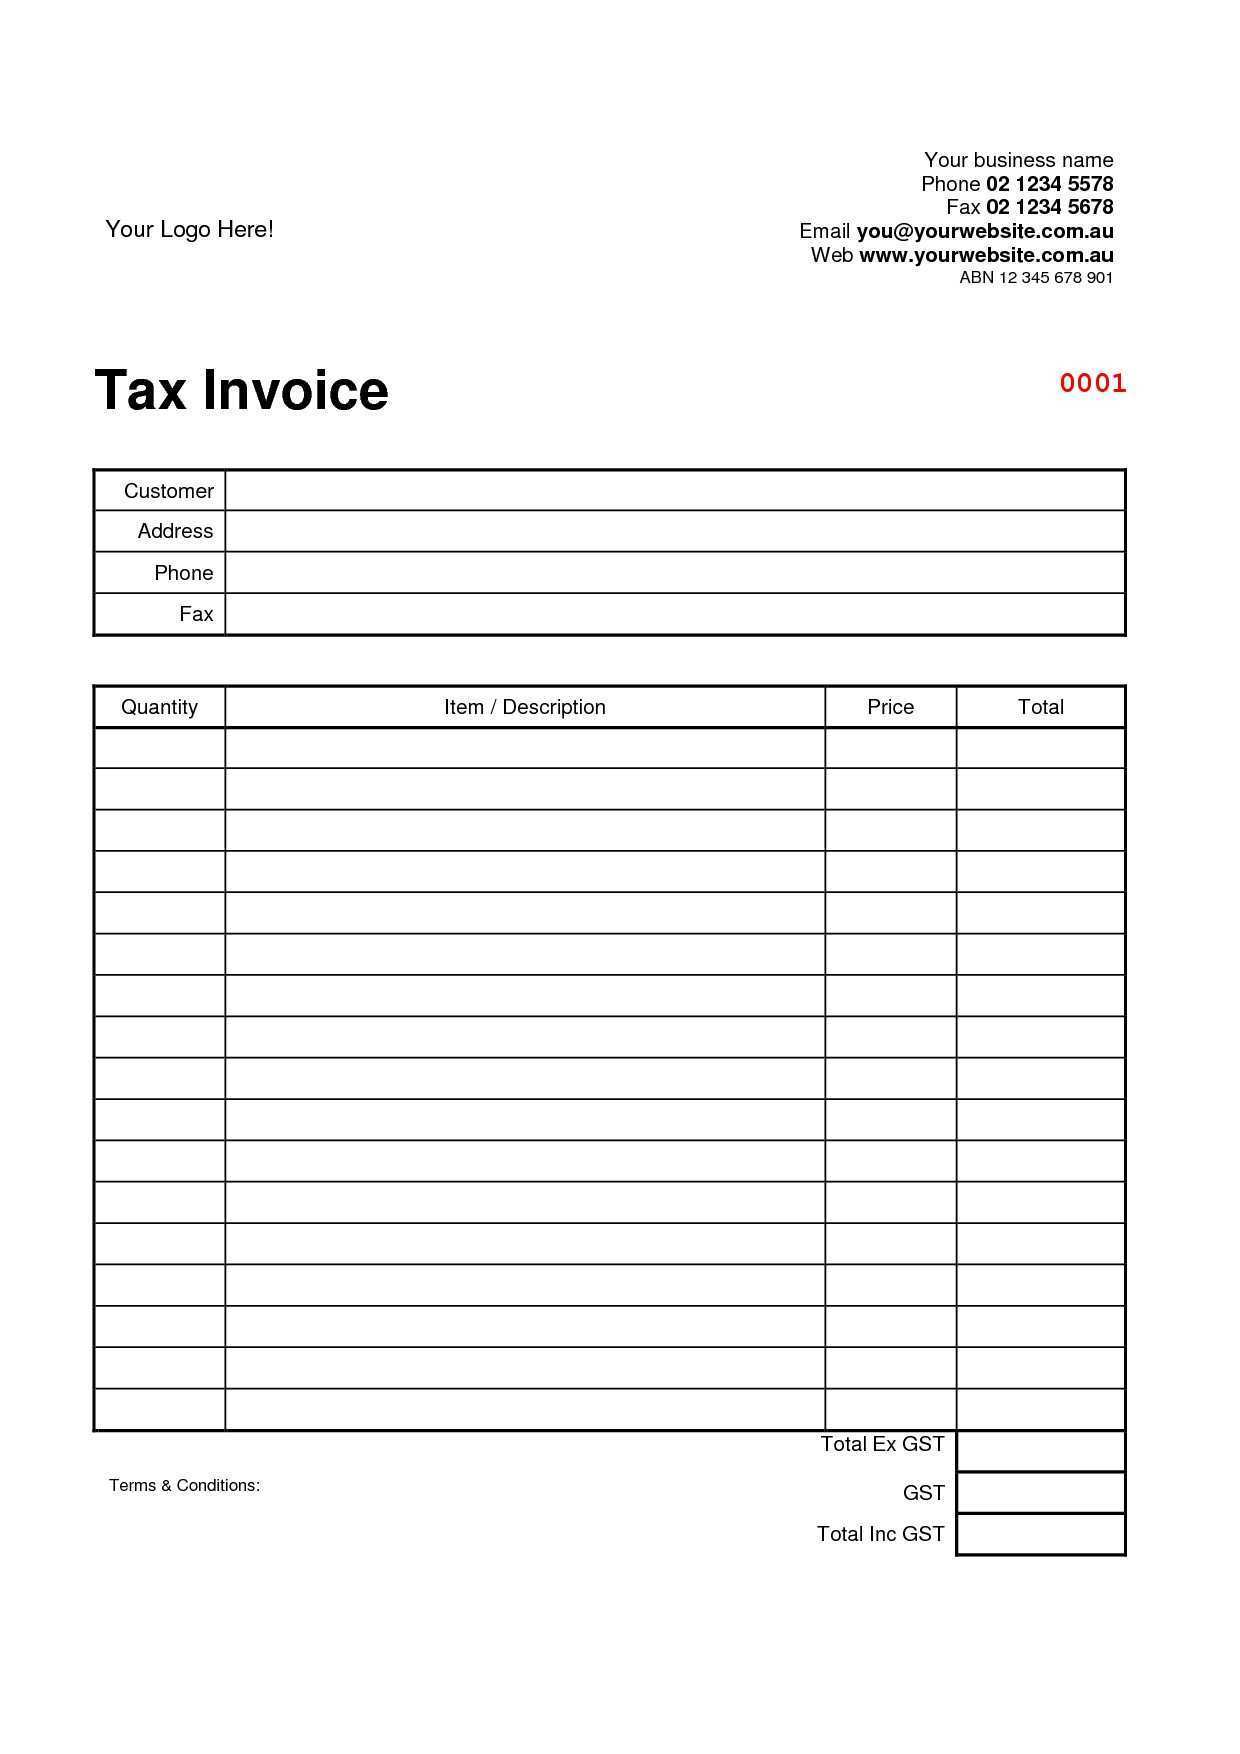 72 Standard Blank Tax Invoice Template Australia Photo For Blank Tax Invoice Template Australia Cards Design Templates